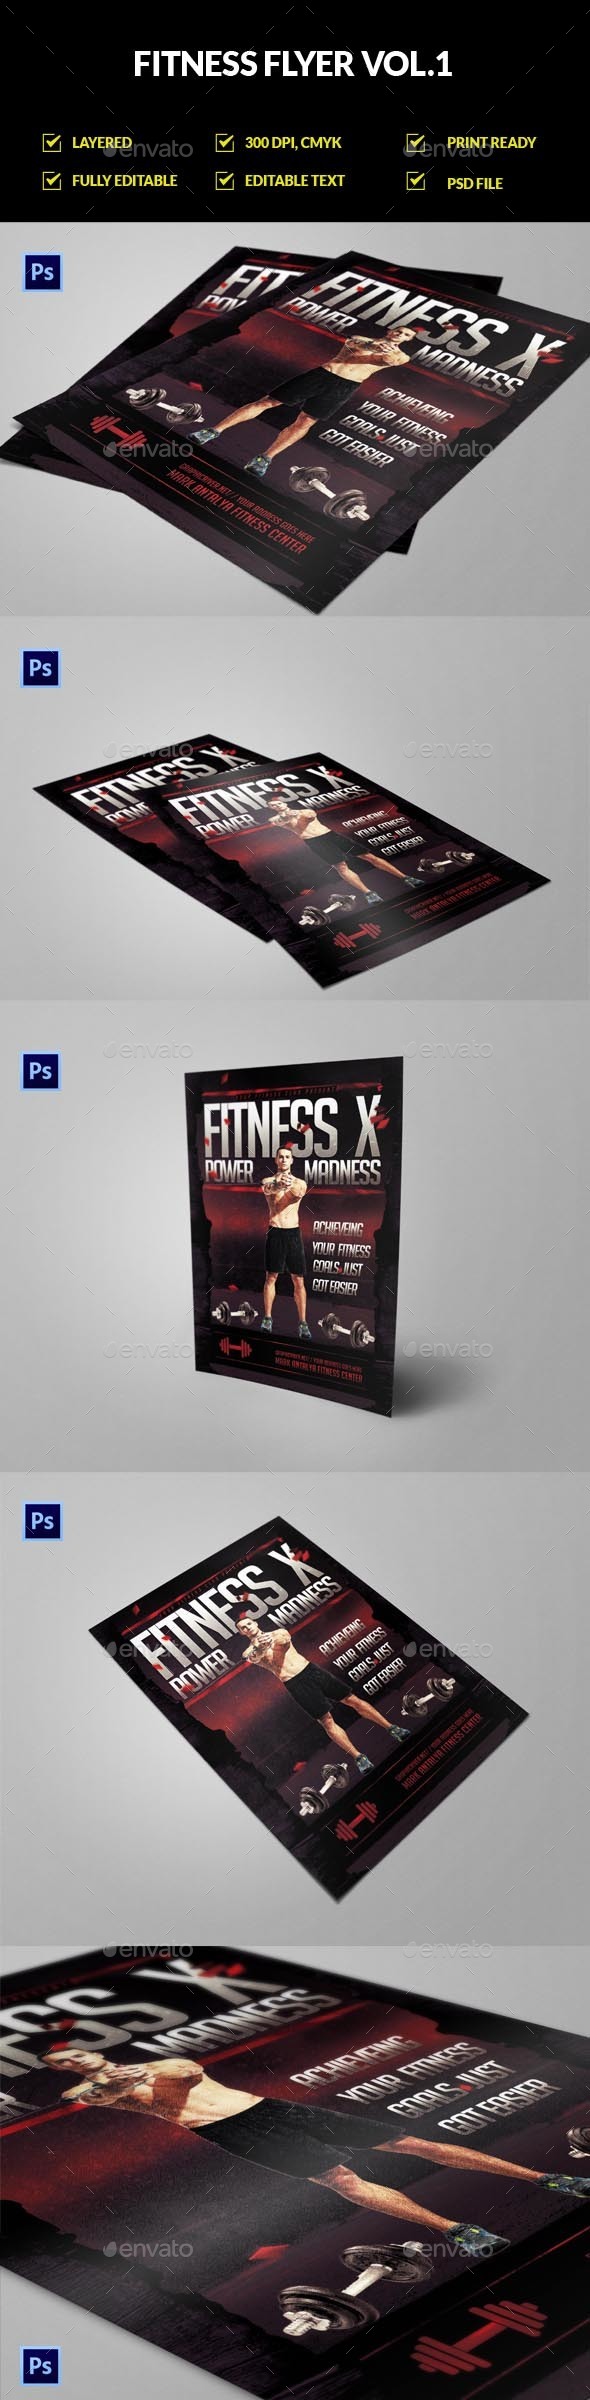 Fitness Flyer Vol.1